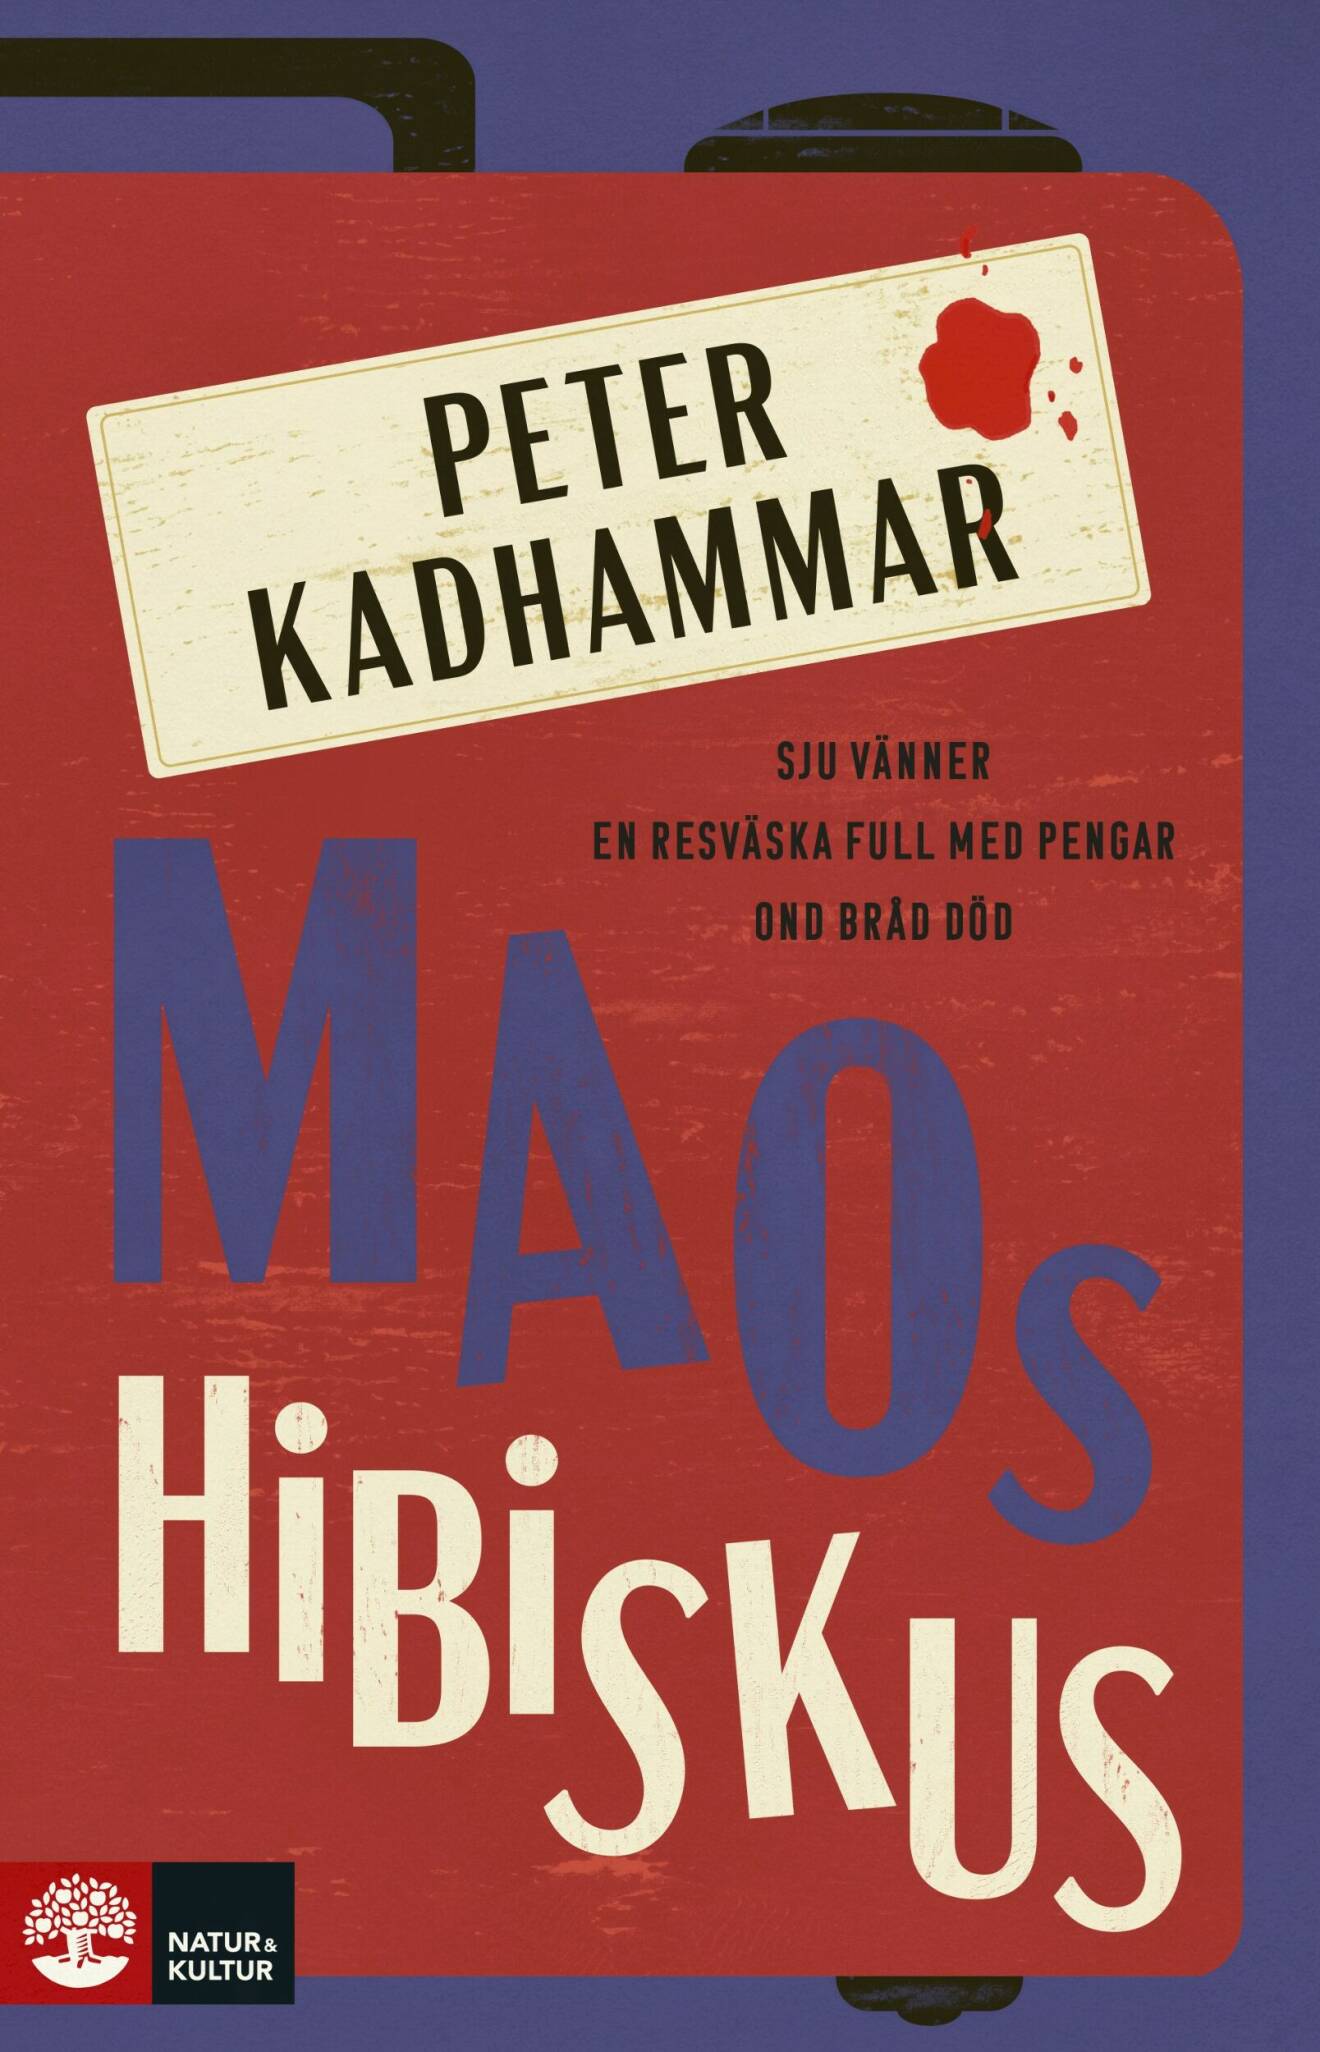 Peter Kadhammar har skrivit boken Maos Hibiskus.